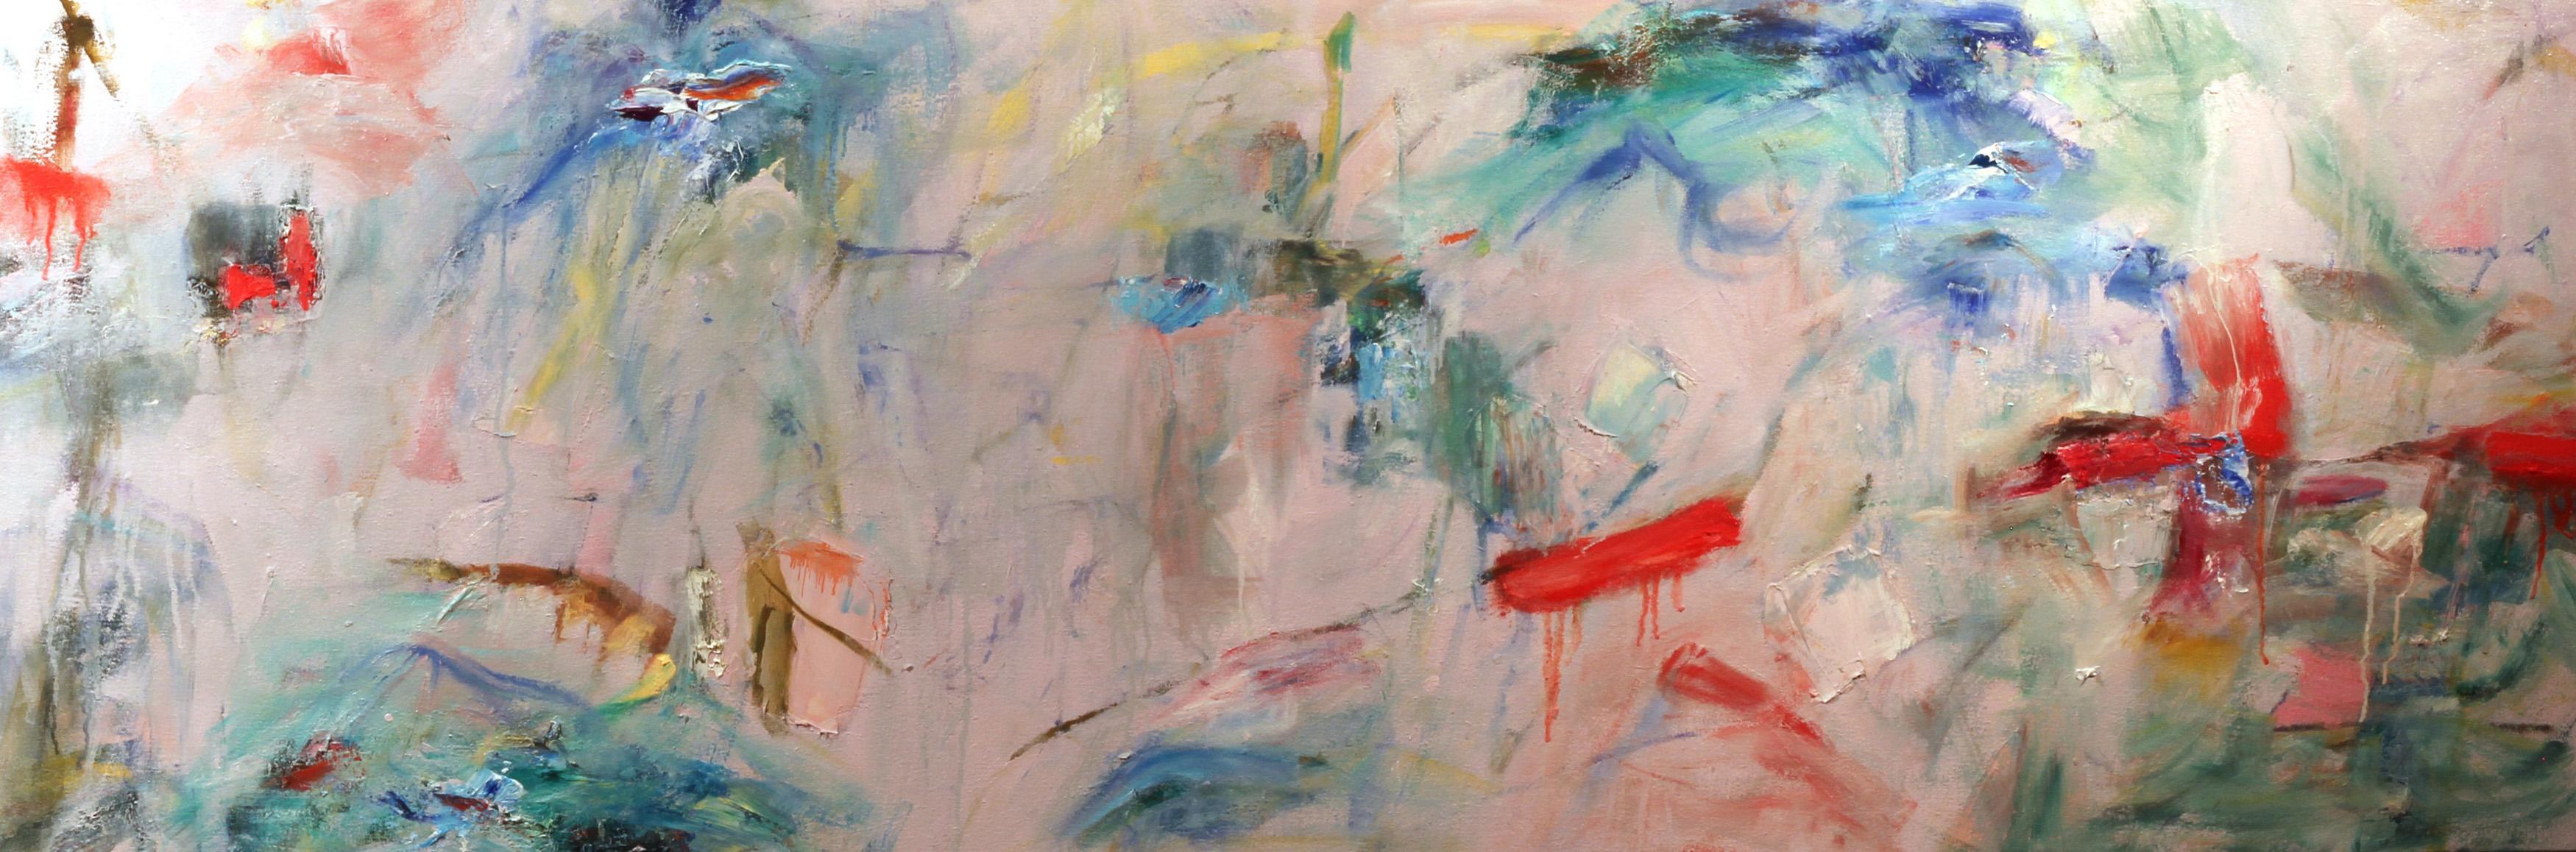 Katherine Borkowski-Byrne Abstract Painting - Moving Along